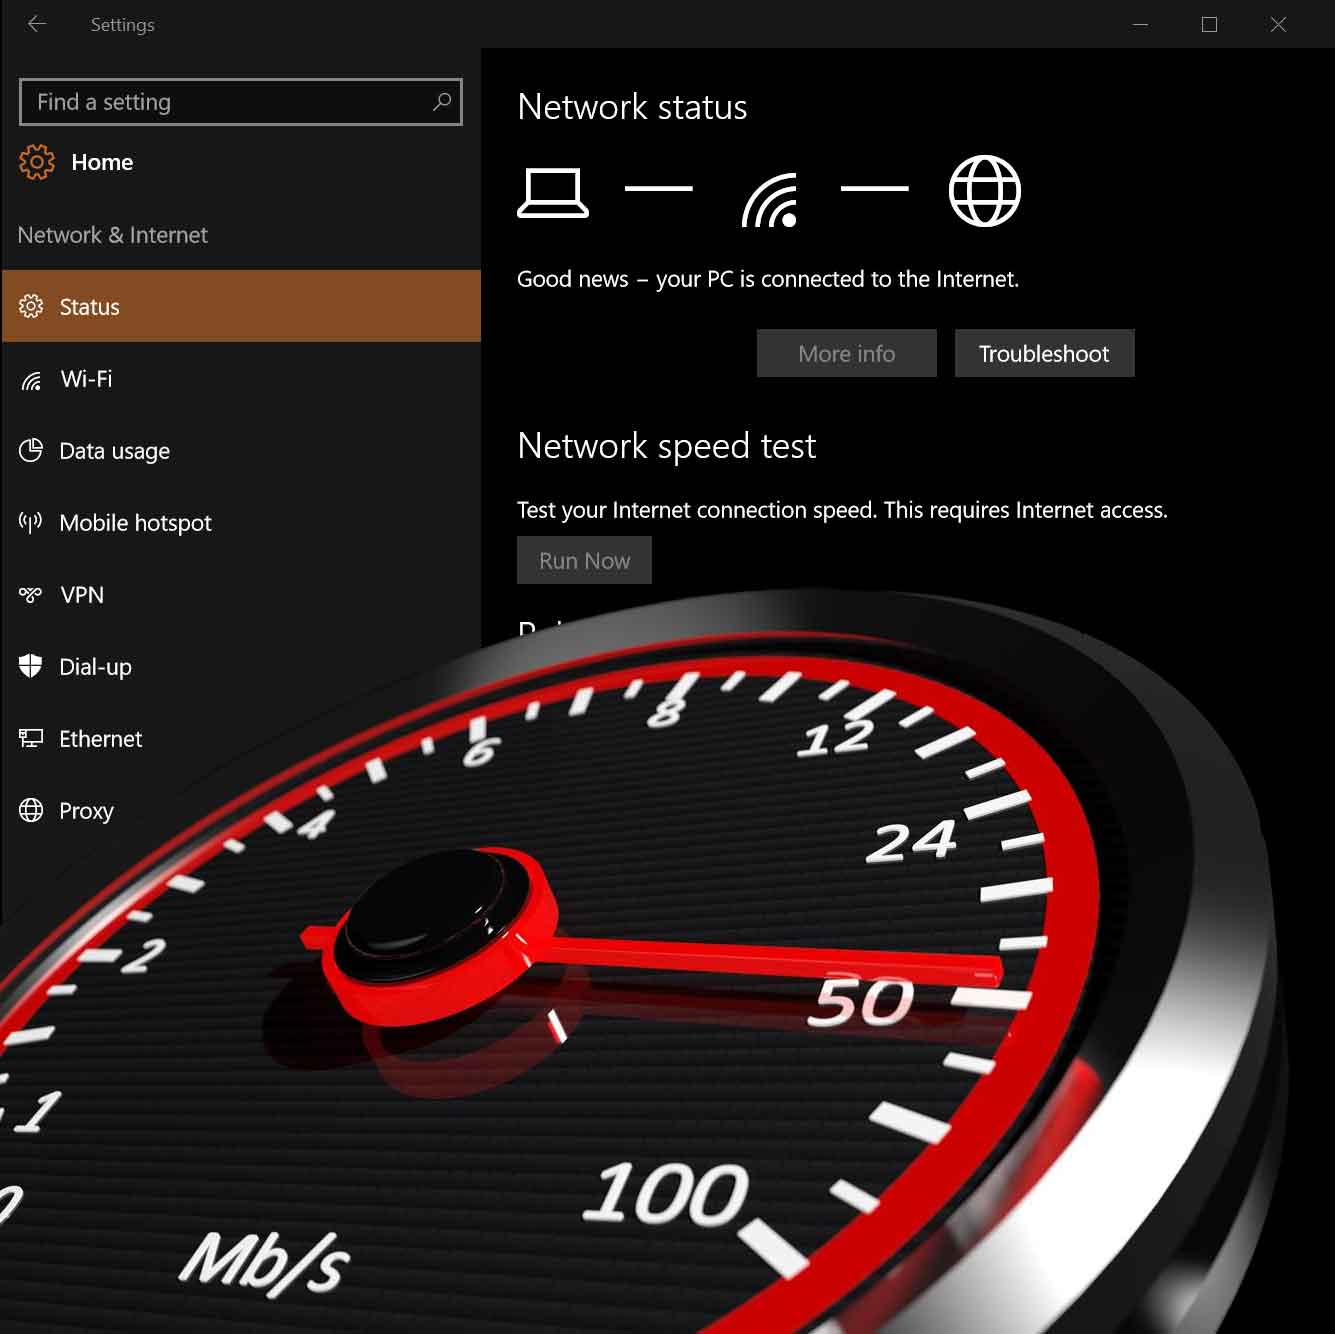 Windows 10 network speed test feature